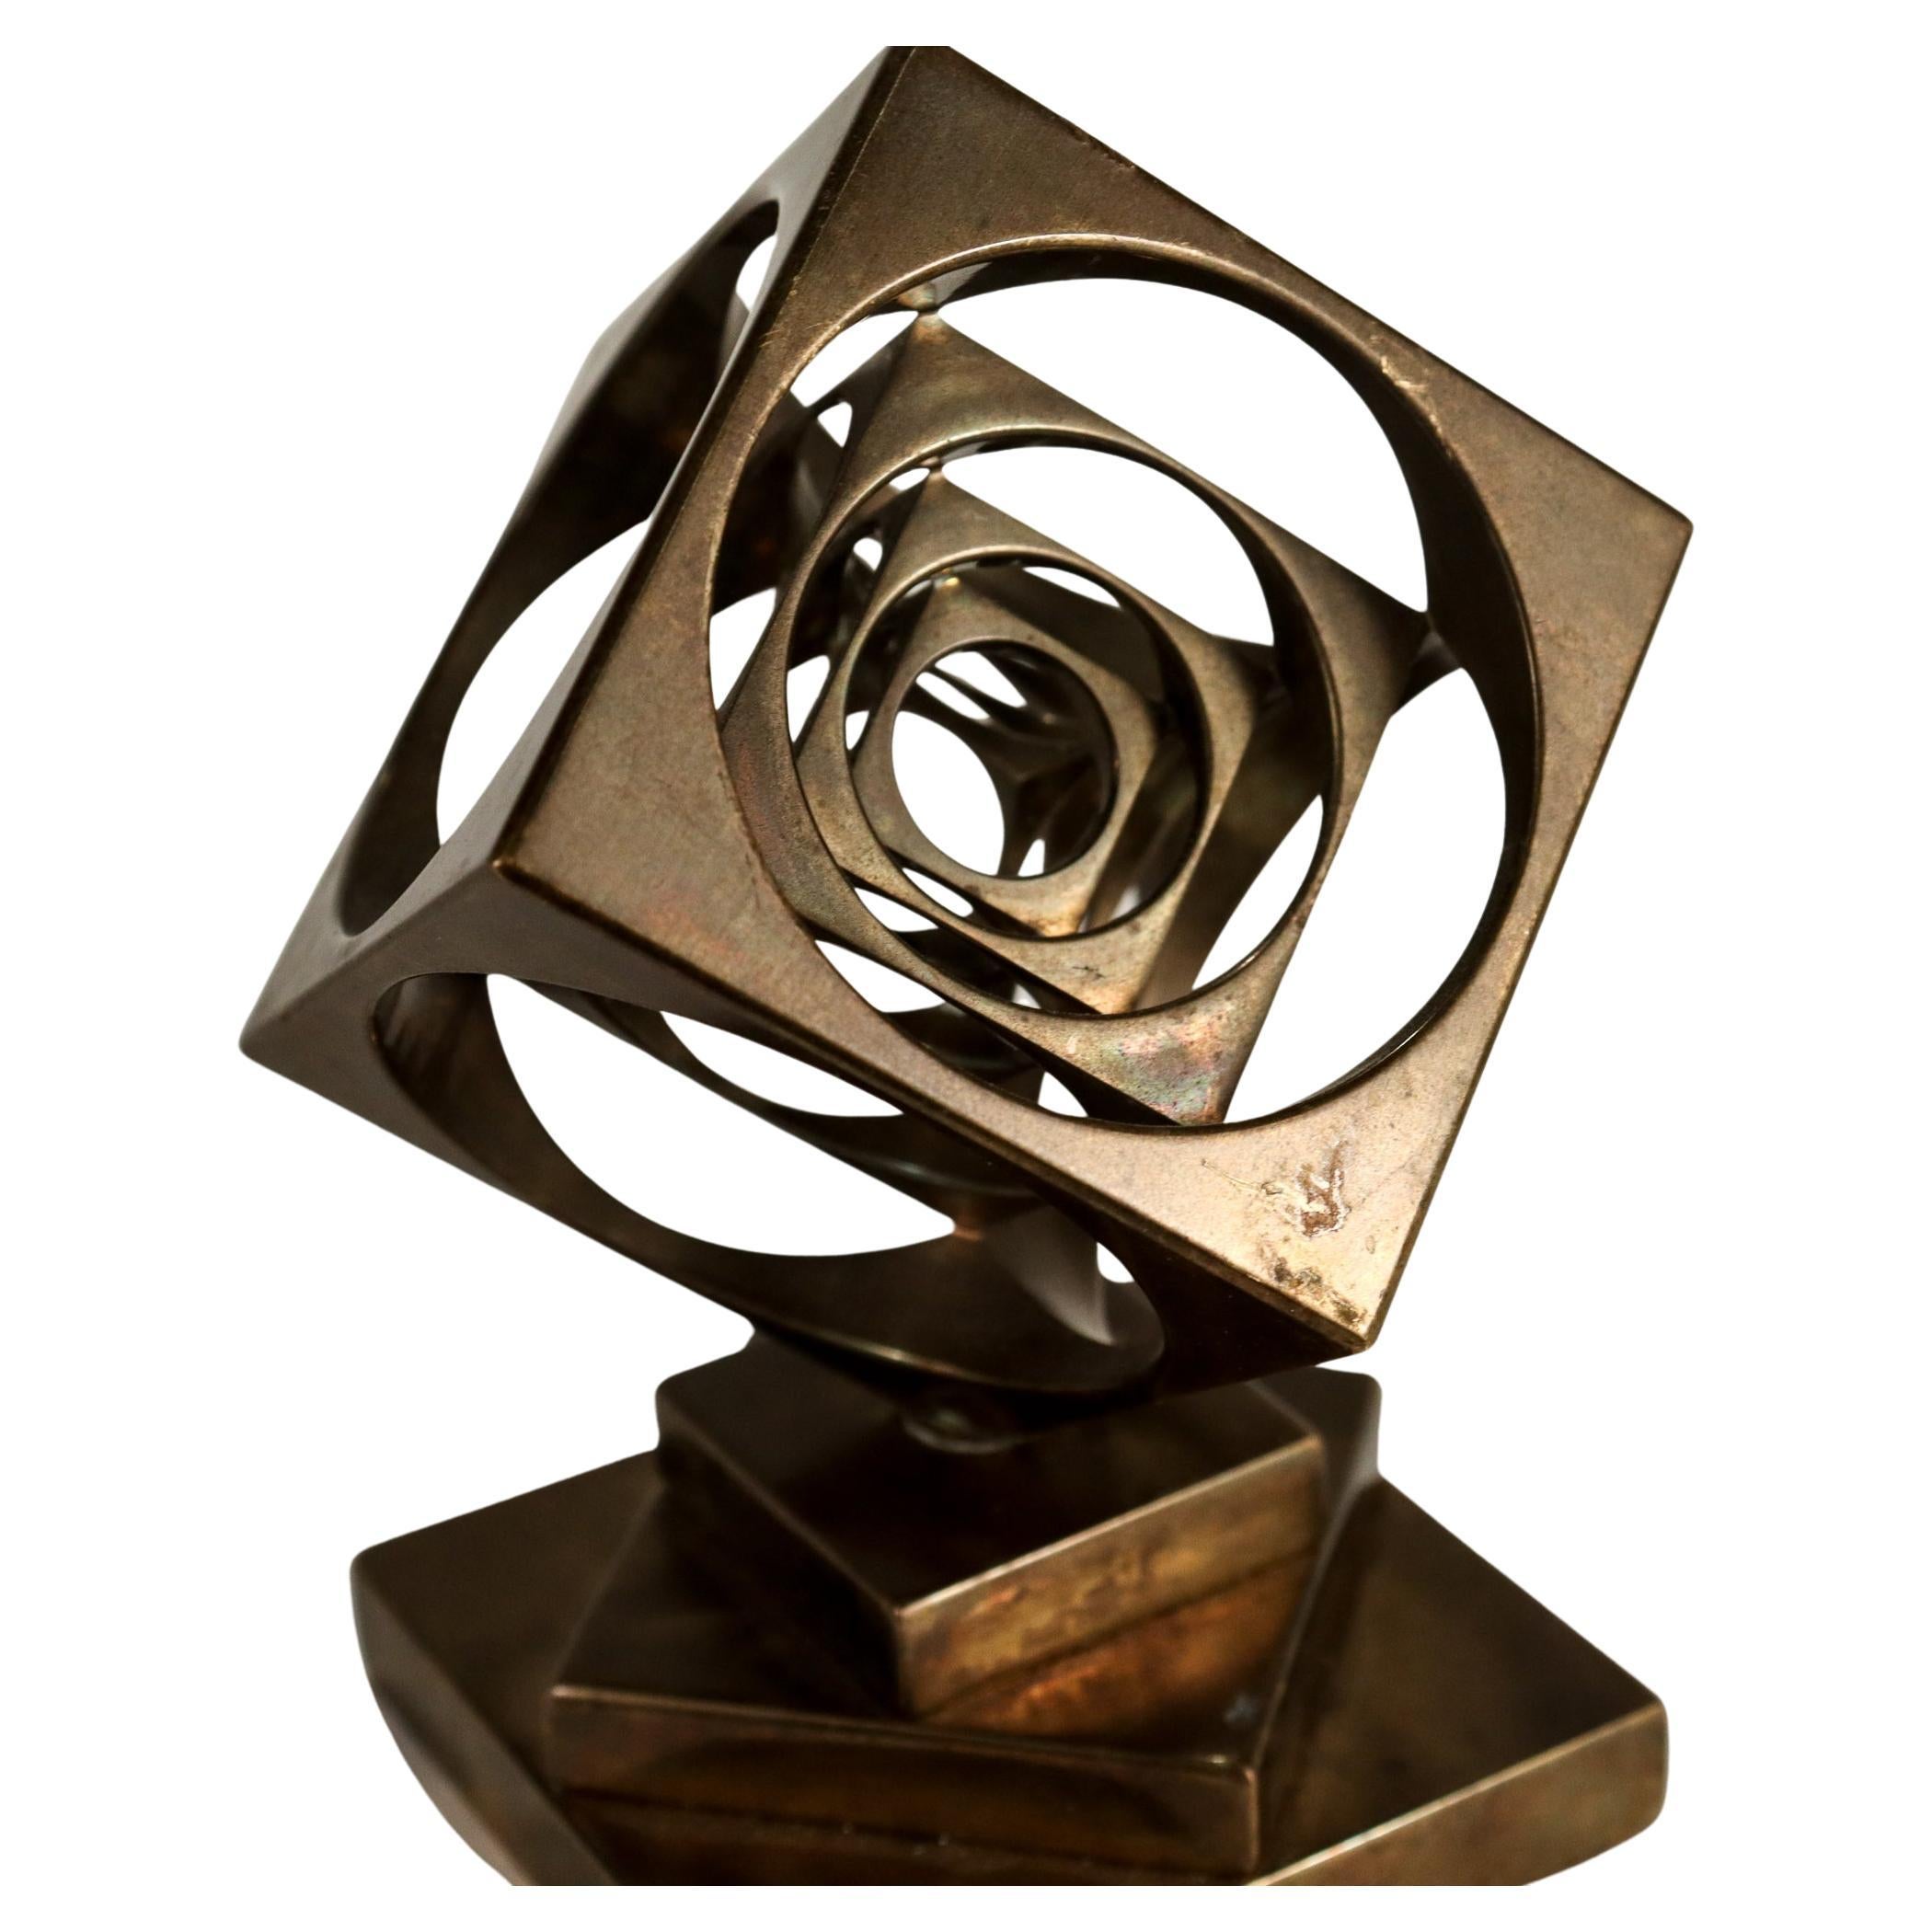 20th Century Midcentury Geometric Machined Bronze Turner's Cube Desk Paperweight / Sculpture